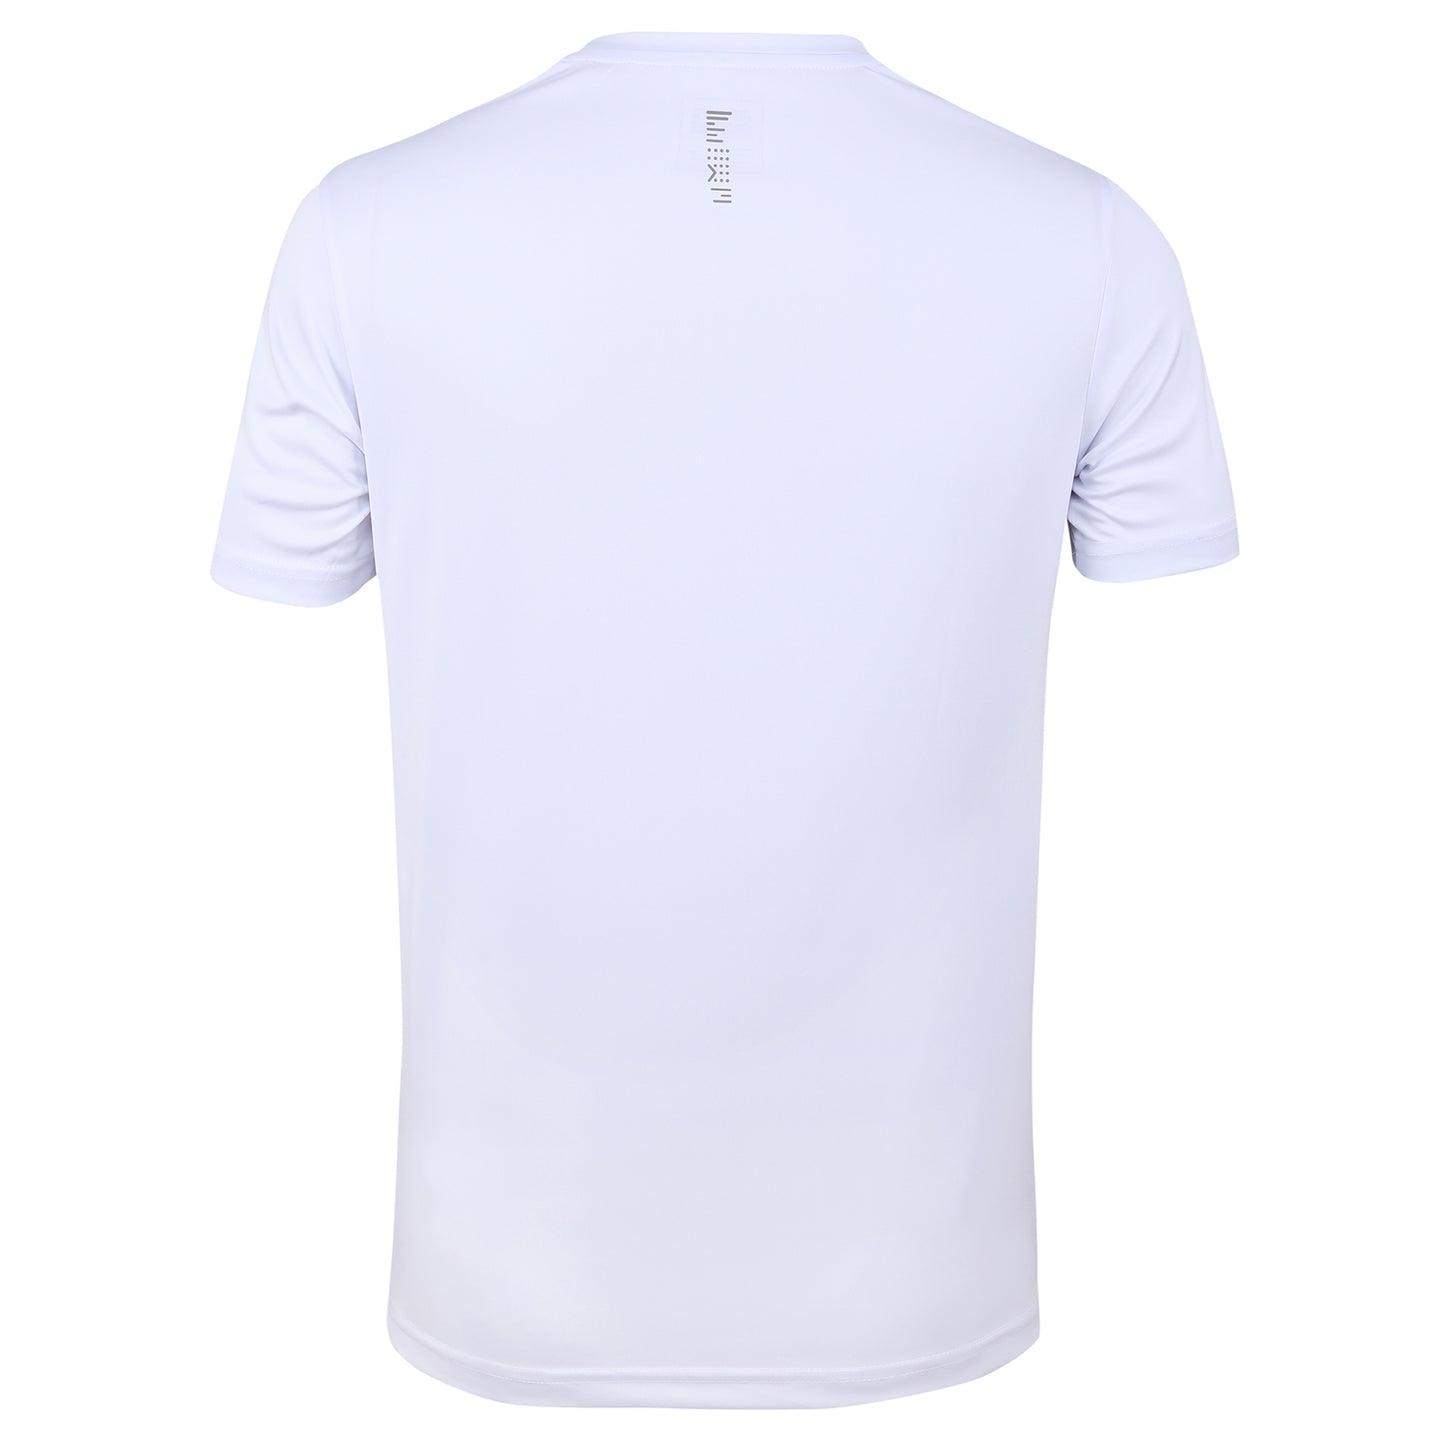 Yonex Round Neck Badminton T-Shirt, White - Best Price online Prokicksports.com